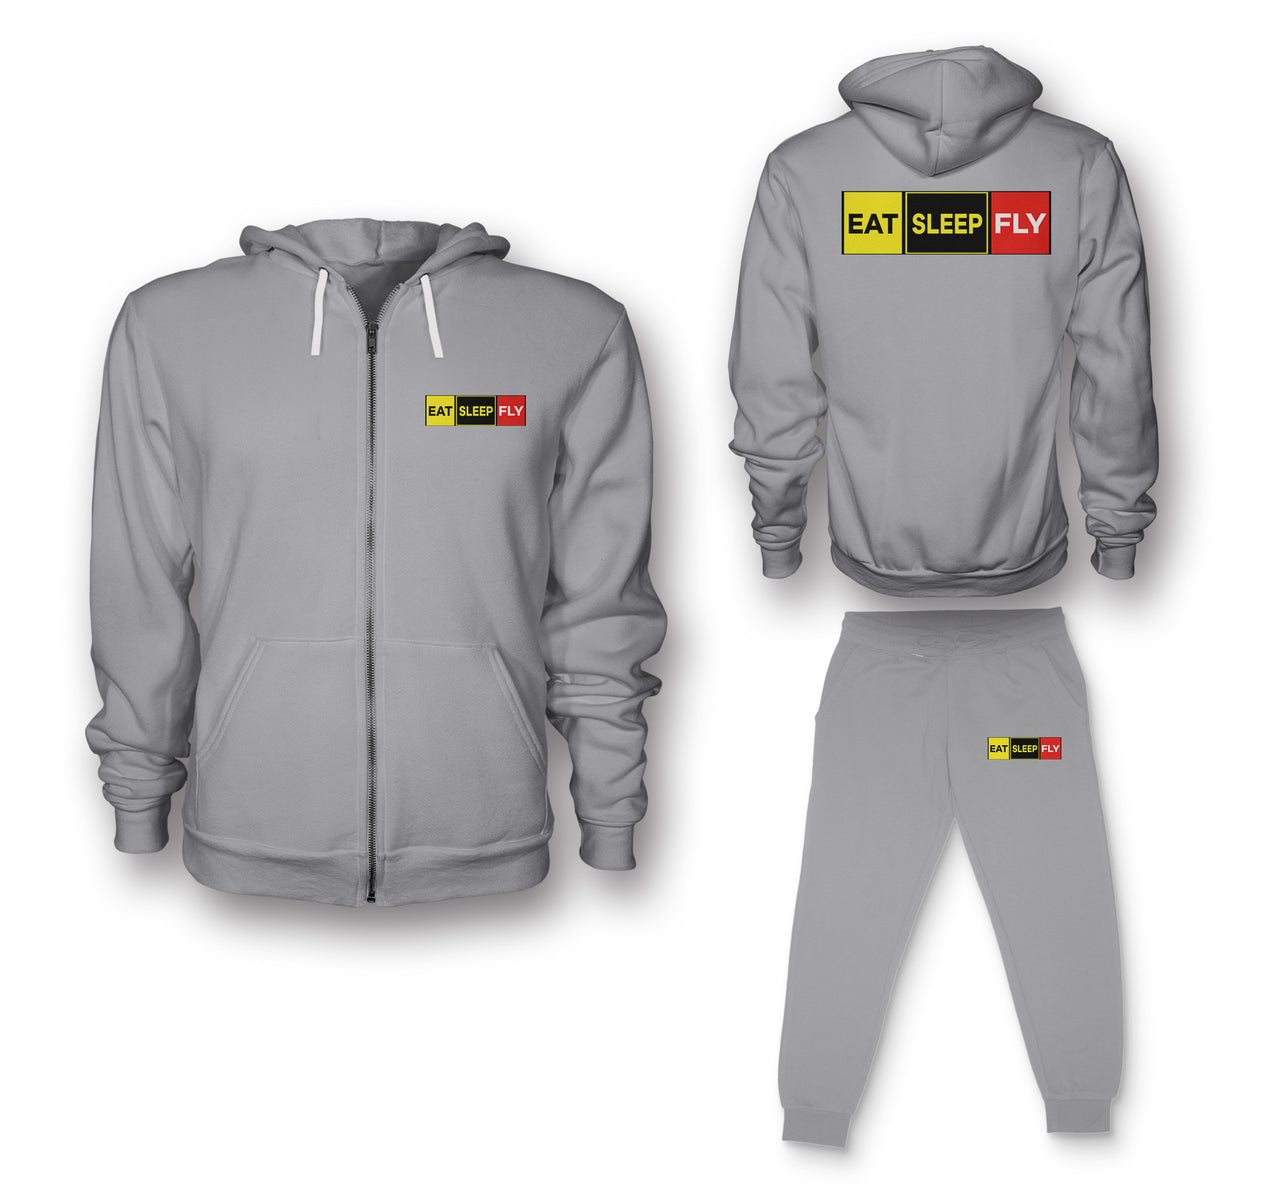 Eat Sleep Fly (Colourful) Designed Zipped Hoodies & Sweatpants Set